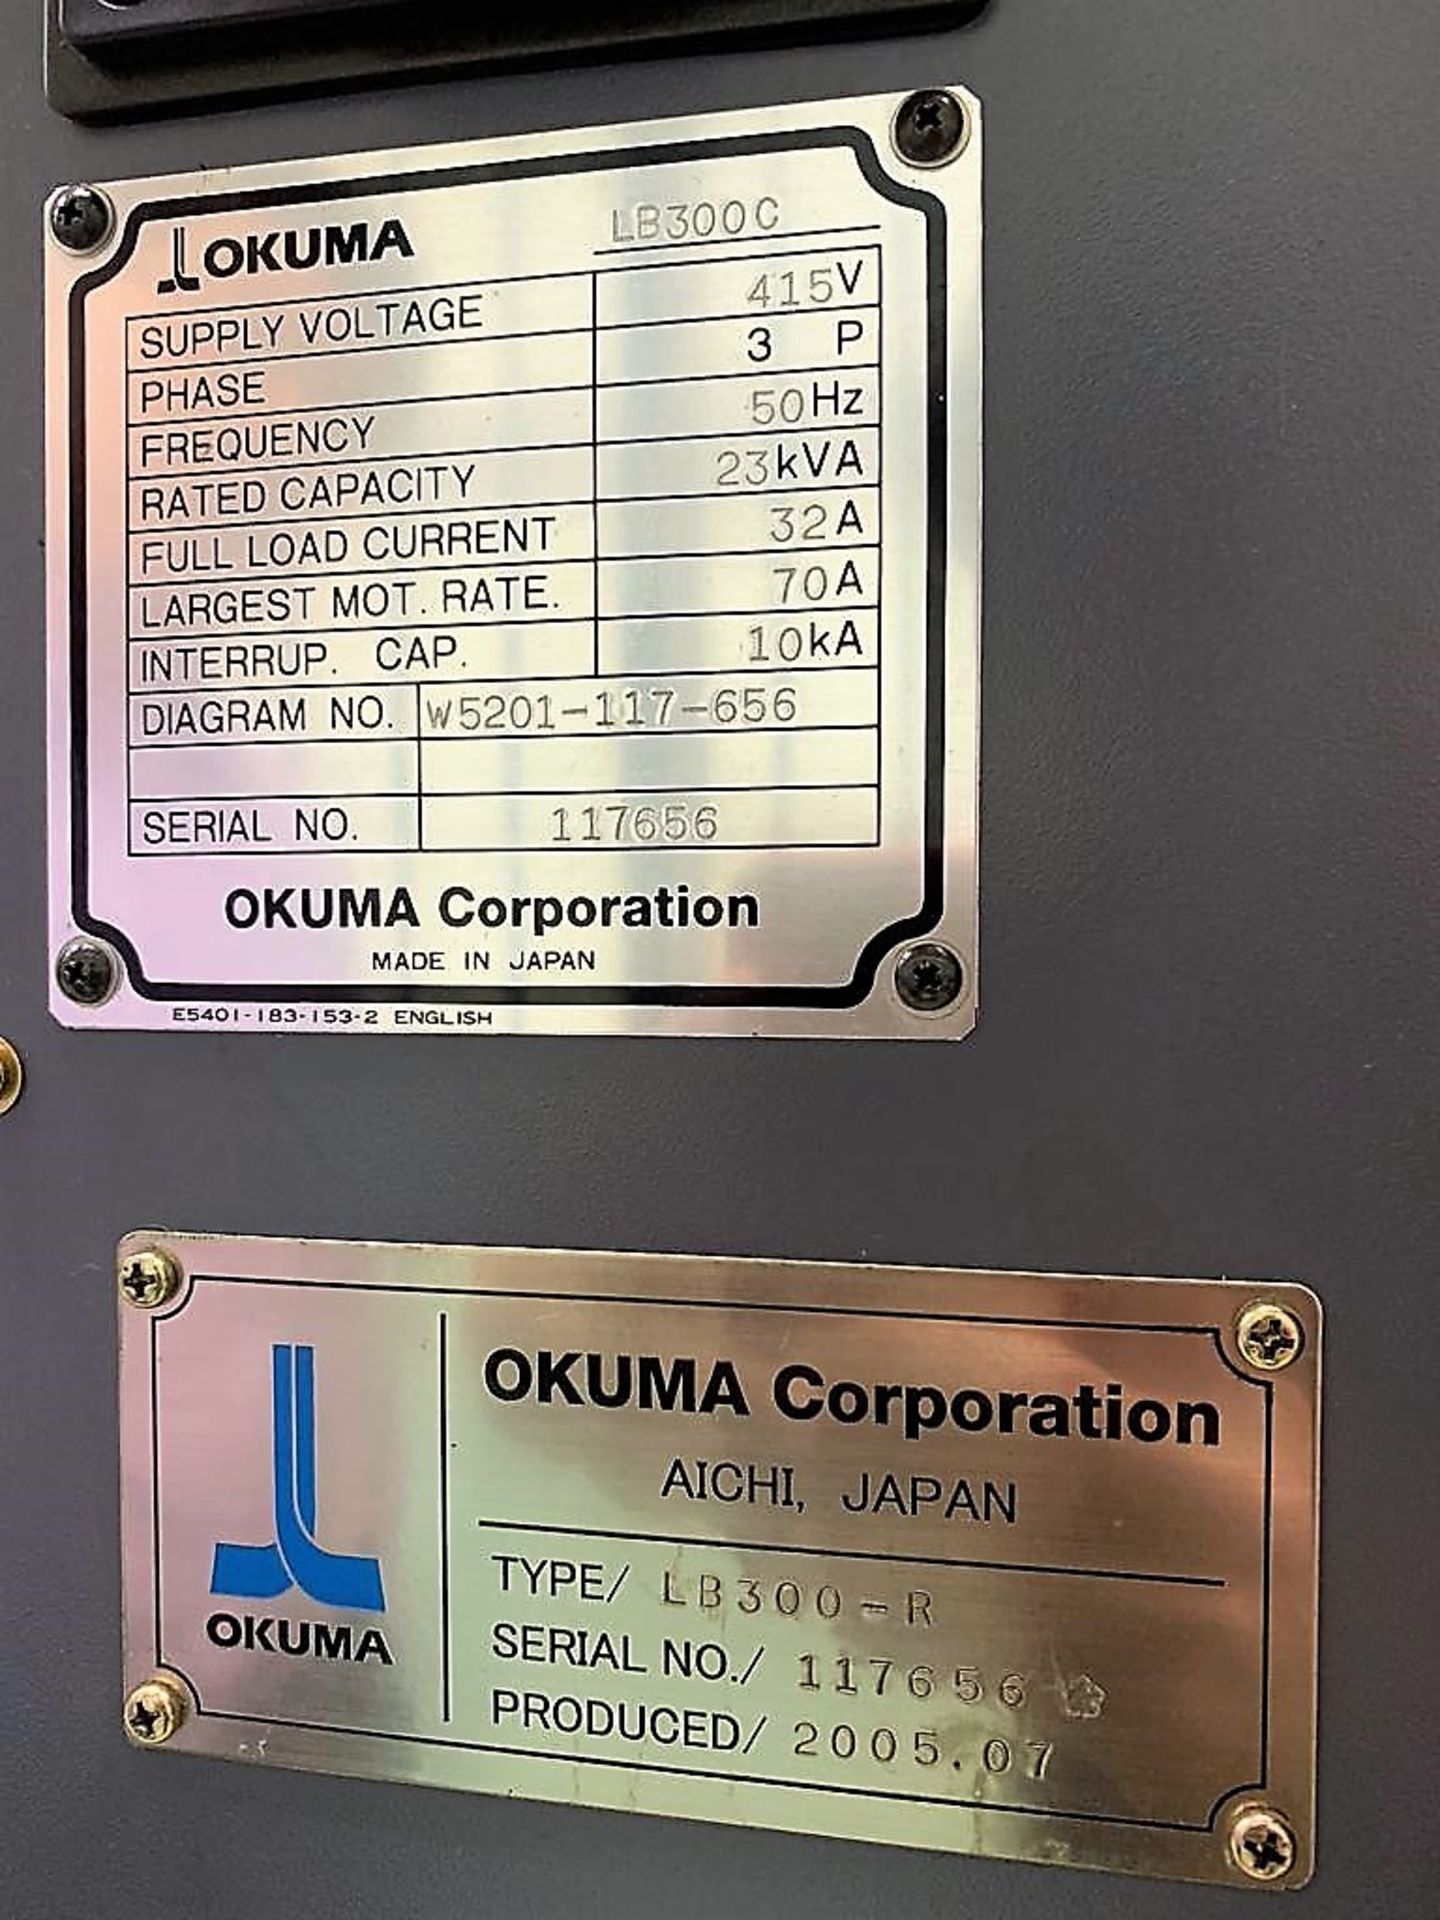 Okuma LB300C 2-Axis CNC Lathe, S/N 117656, New 2005 - Image 9 of 9